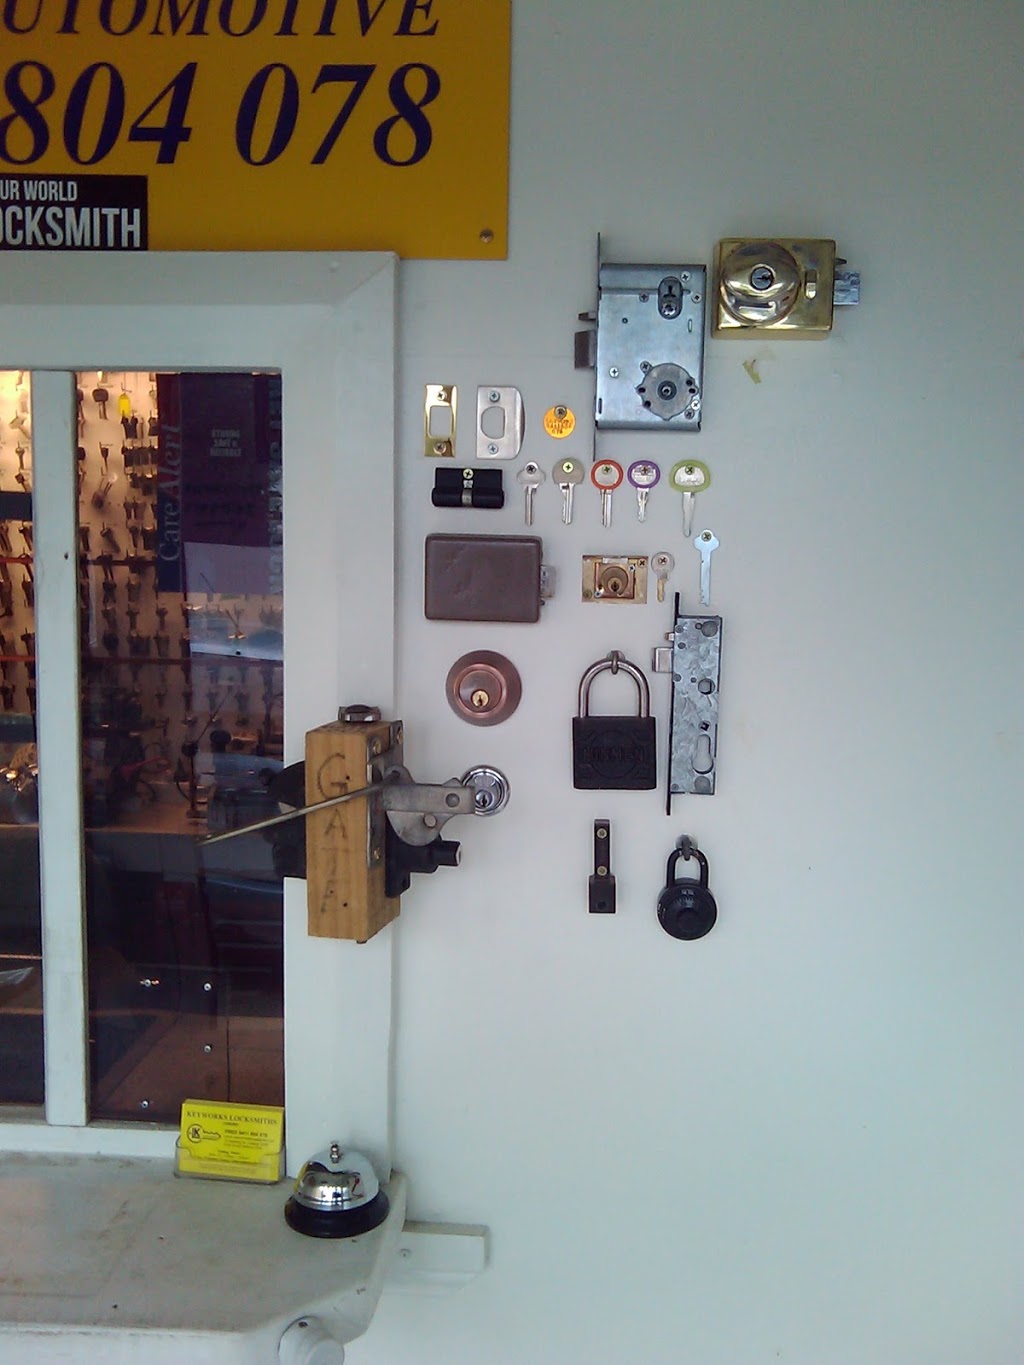 Keyworks Locksmiths Coburg | locksmith | 73 Harding Street, (ENTRY via Salisbury St), Coburg VIC 3058, Australia | 0411804078 OR +61 411 804 078